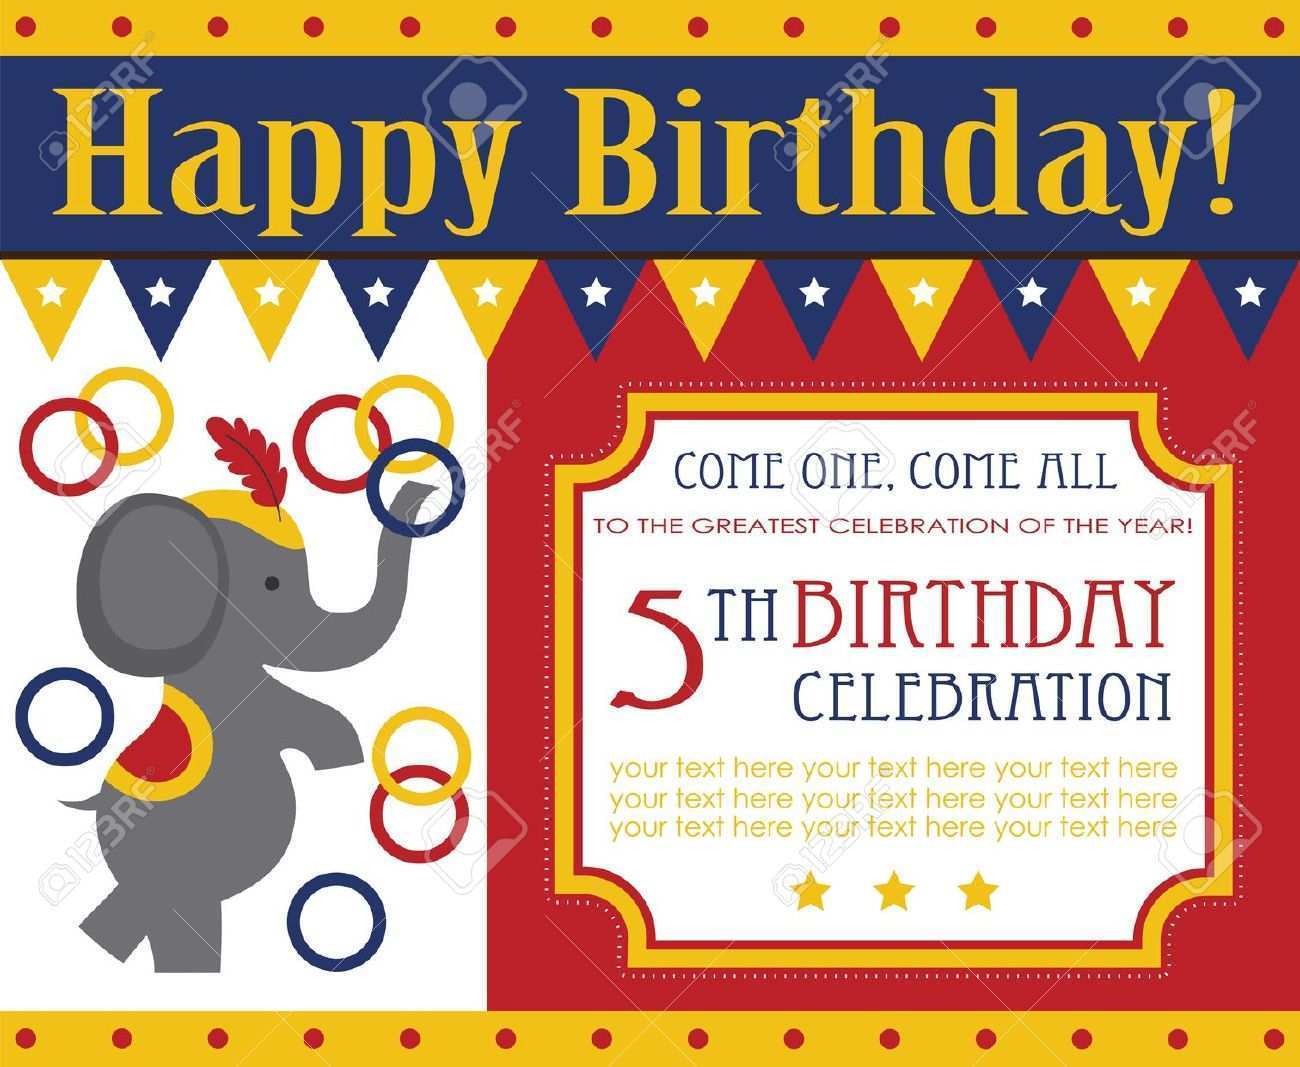 37 Creative Birthday Invitation Card Template For Boy Formating for Birthday Invitation Card Template For Boy